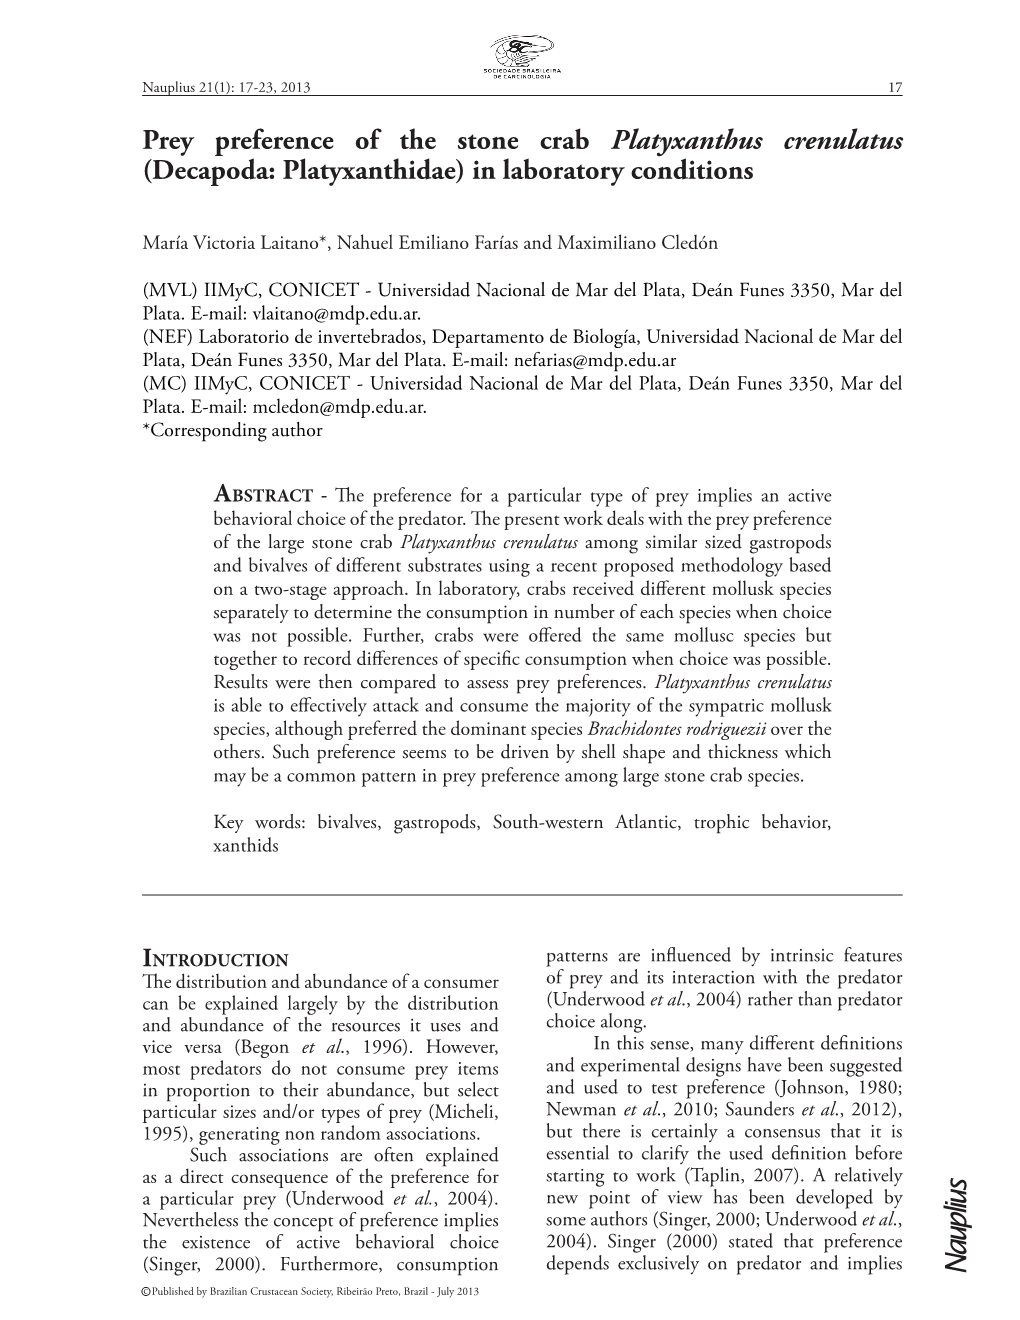 Prey Preference of the Stone Crab Platyxanthus Crenulatus (Decapoda: Platyxanthidae) in Laboratory Conditions